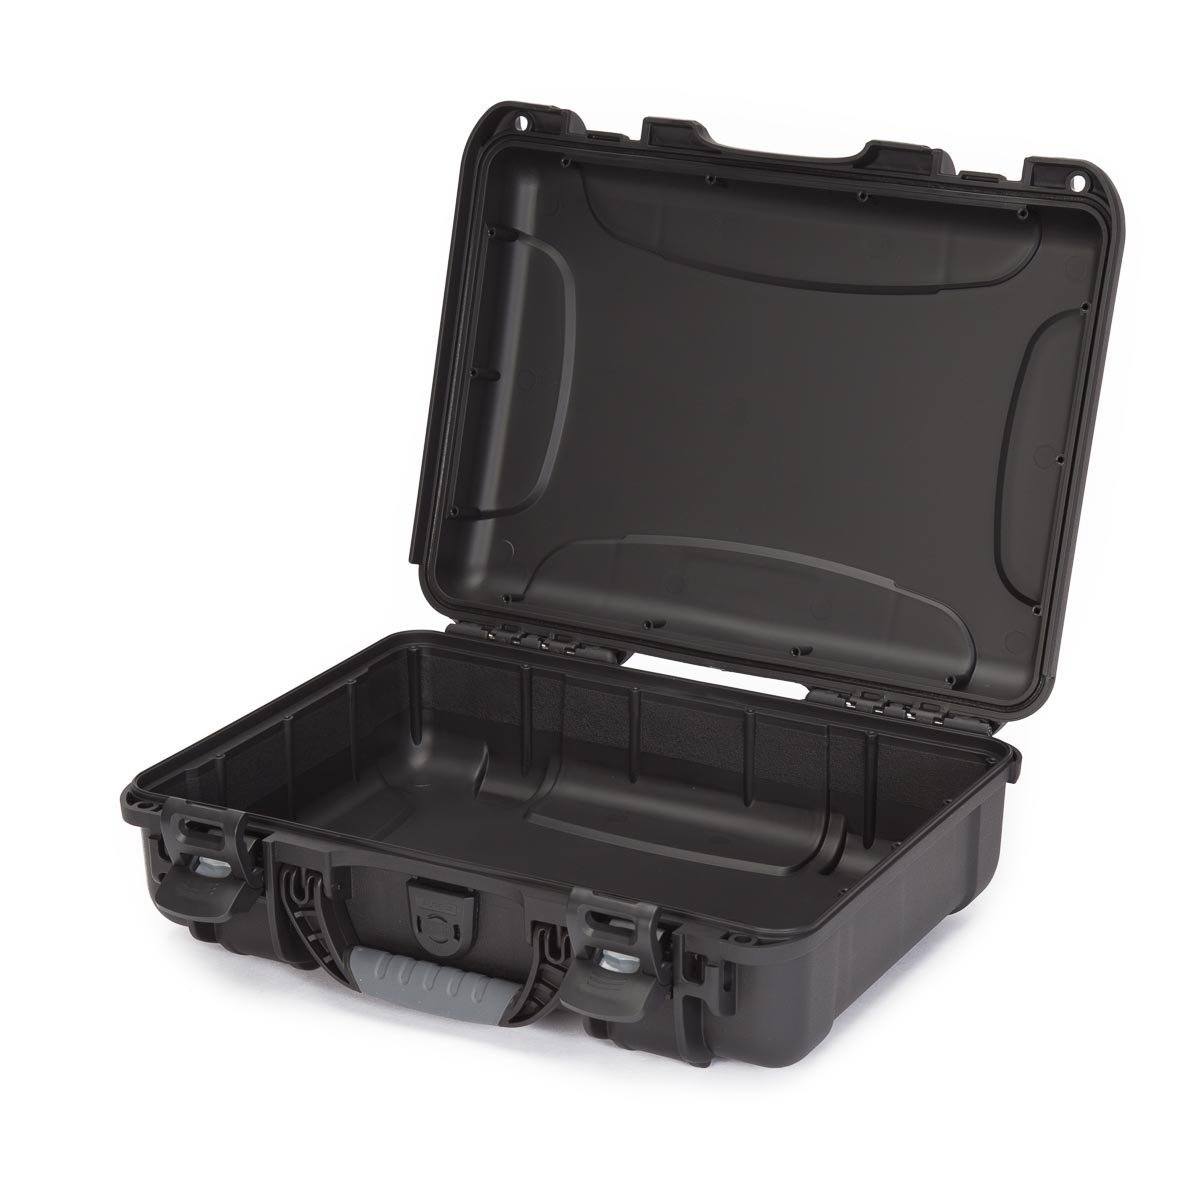 NANUK 918 Hard Case | Official NANUK Protective Case Online Store